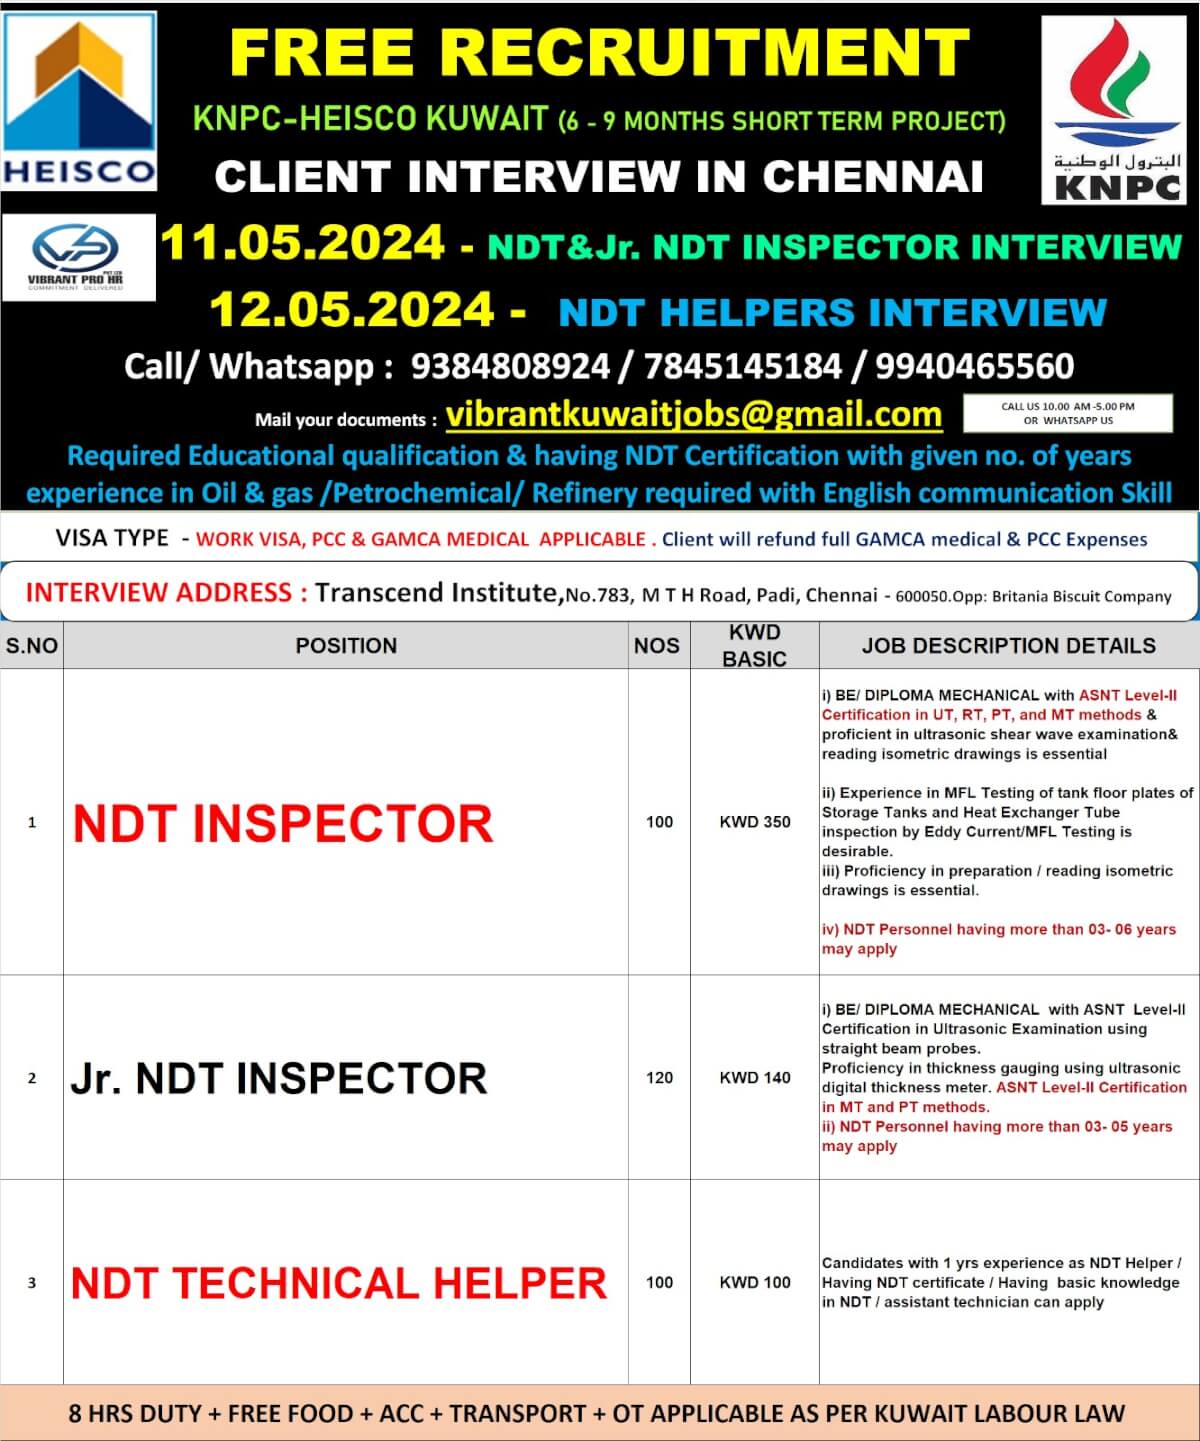 FREE RECRUITMENT - CLIENT INTERVIEW IN CHENNAI -11.05.2024 - NDT & Jr. NDT INSPECTOR INTERVIEW & 12.05.2024 - NDT HELPERS INTERVIEW- KNPC-HEISCO KUWAIT (6 - 9 MONTHS SHORT TERM PROJECT)